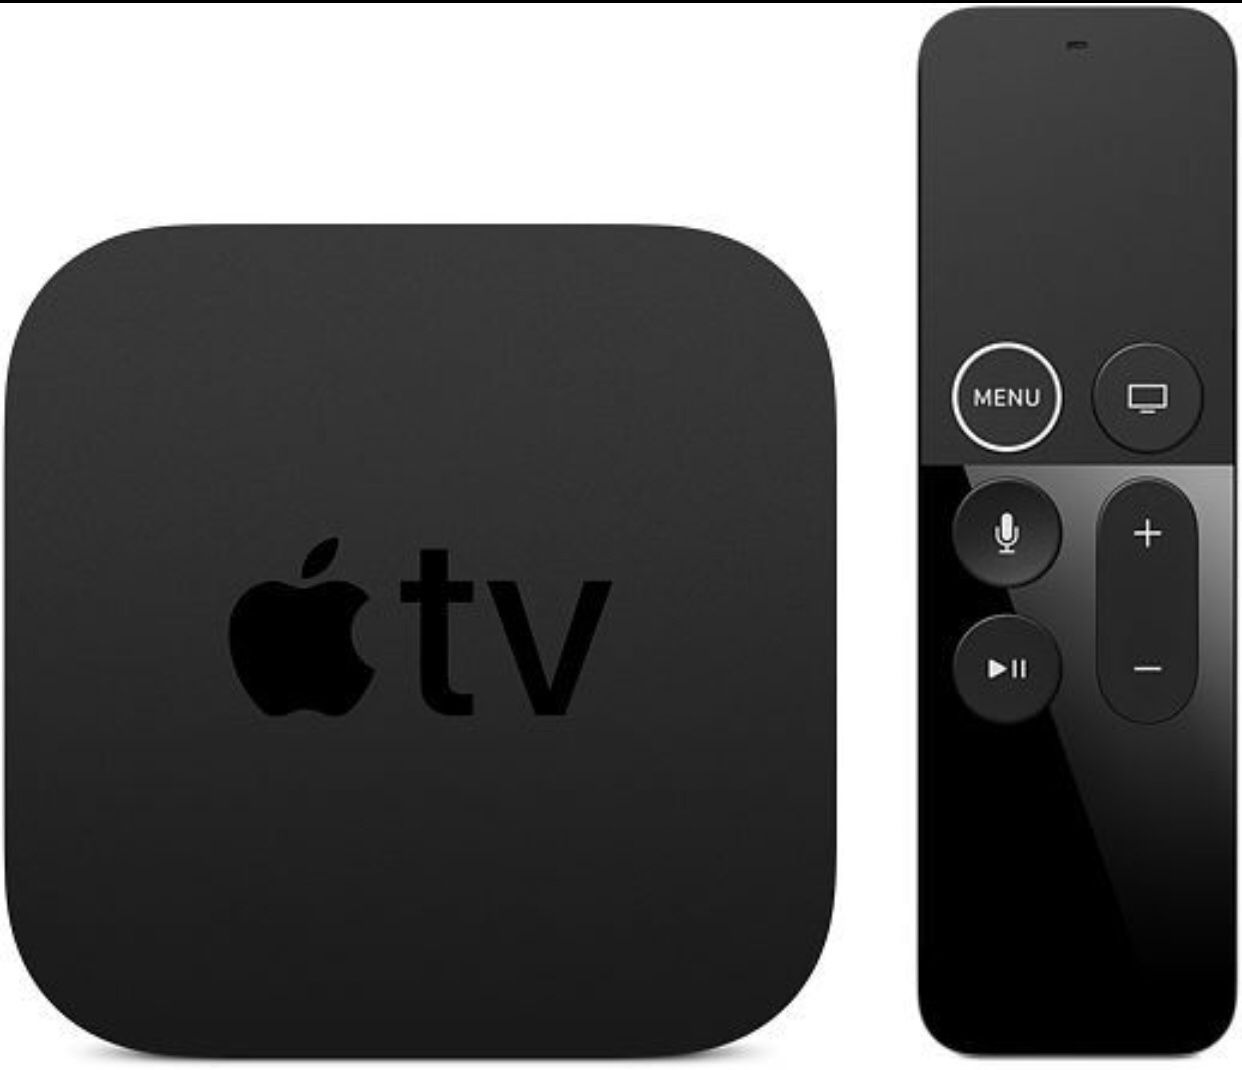 Apple TV Latest Model 4th Generation